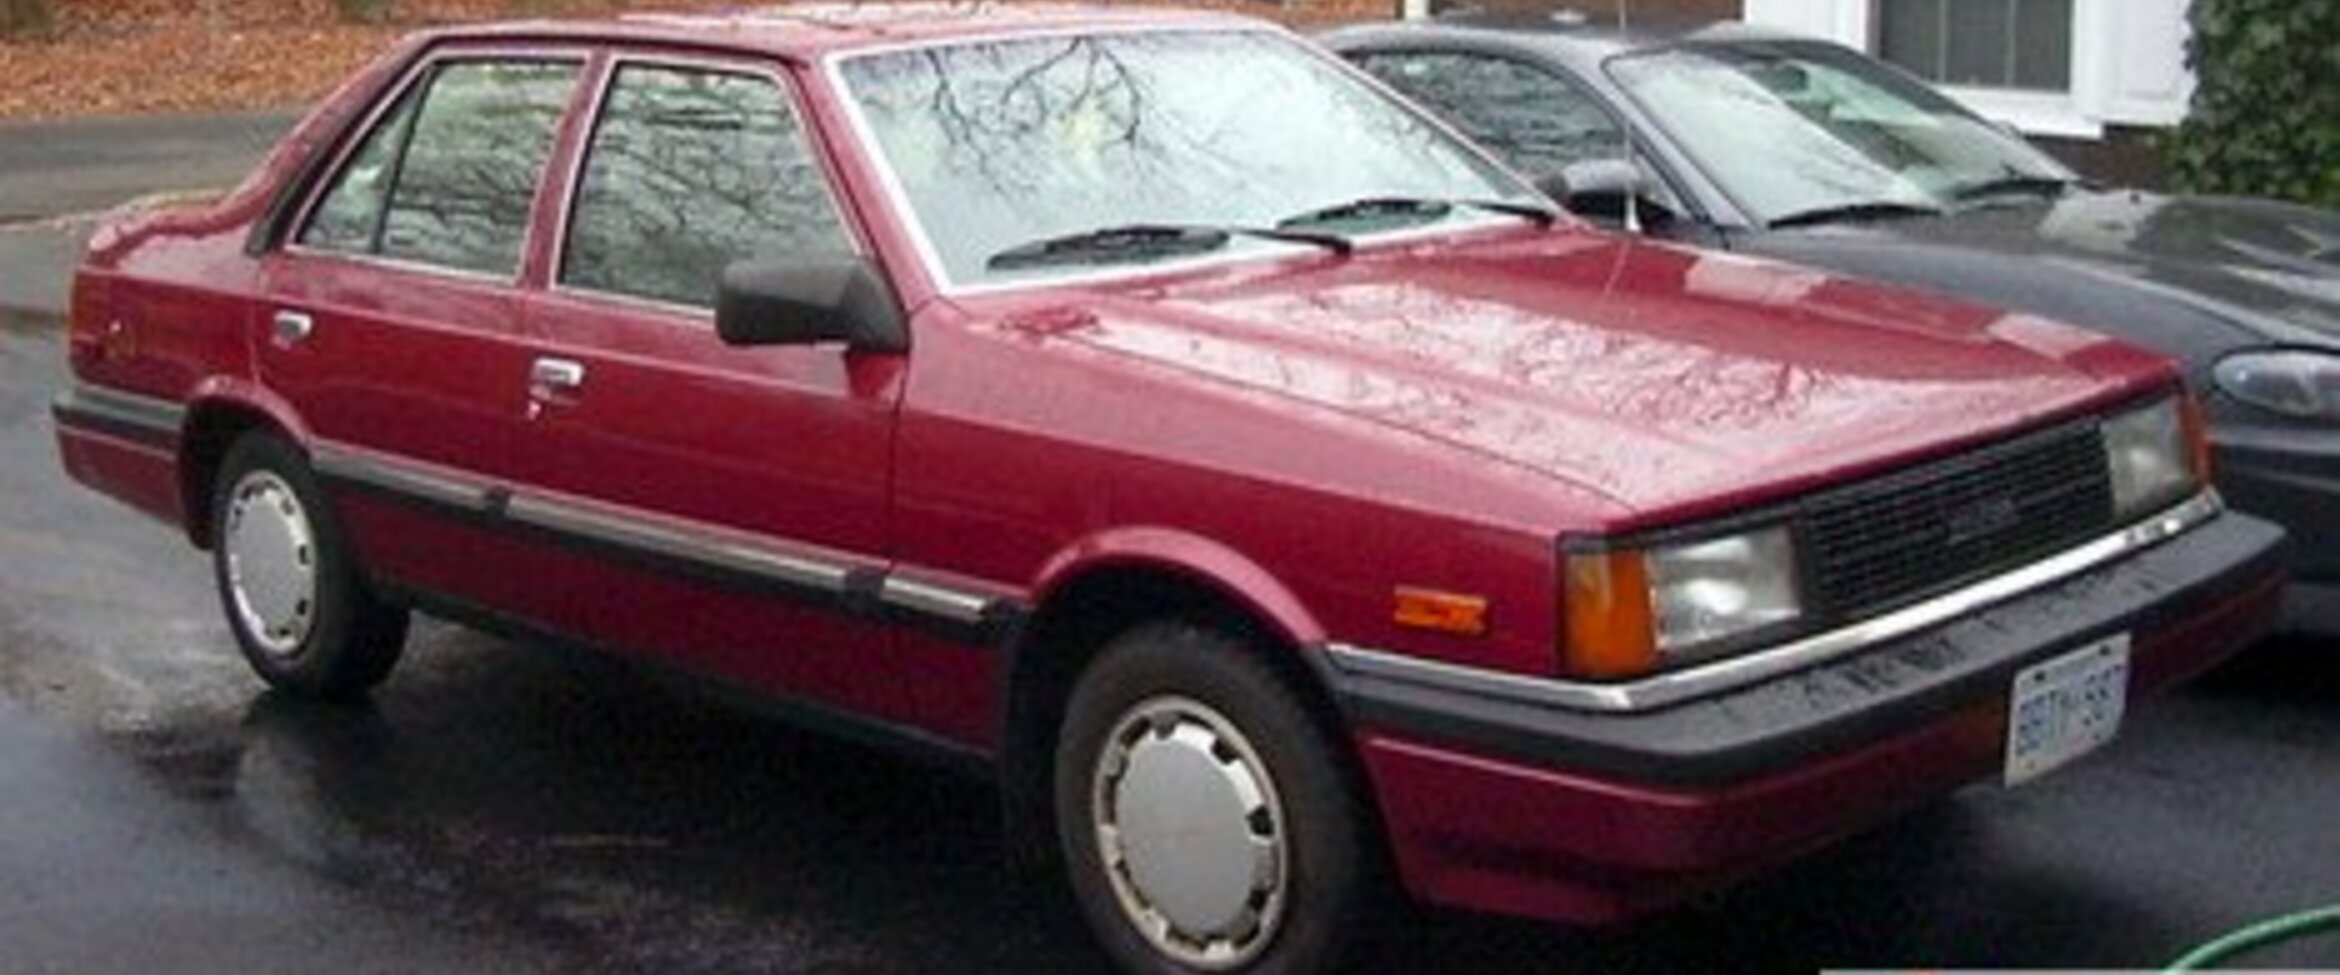 Hyundai Stellar 2.0 (93 Hp) Automatic 1983, 1984, 1985, 1986, 1987, 1988, 1989, 1990, 1991, 1992, 1993 